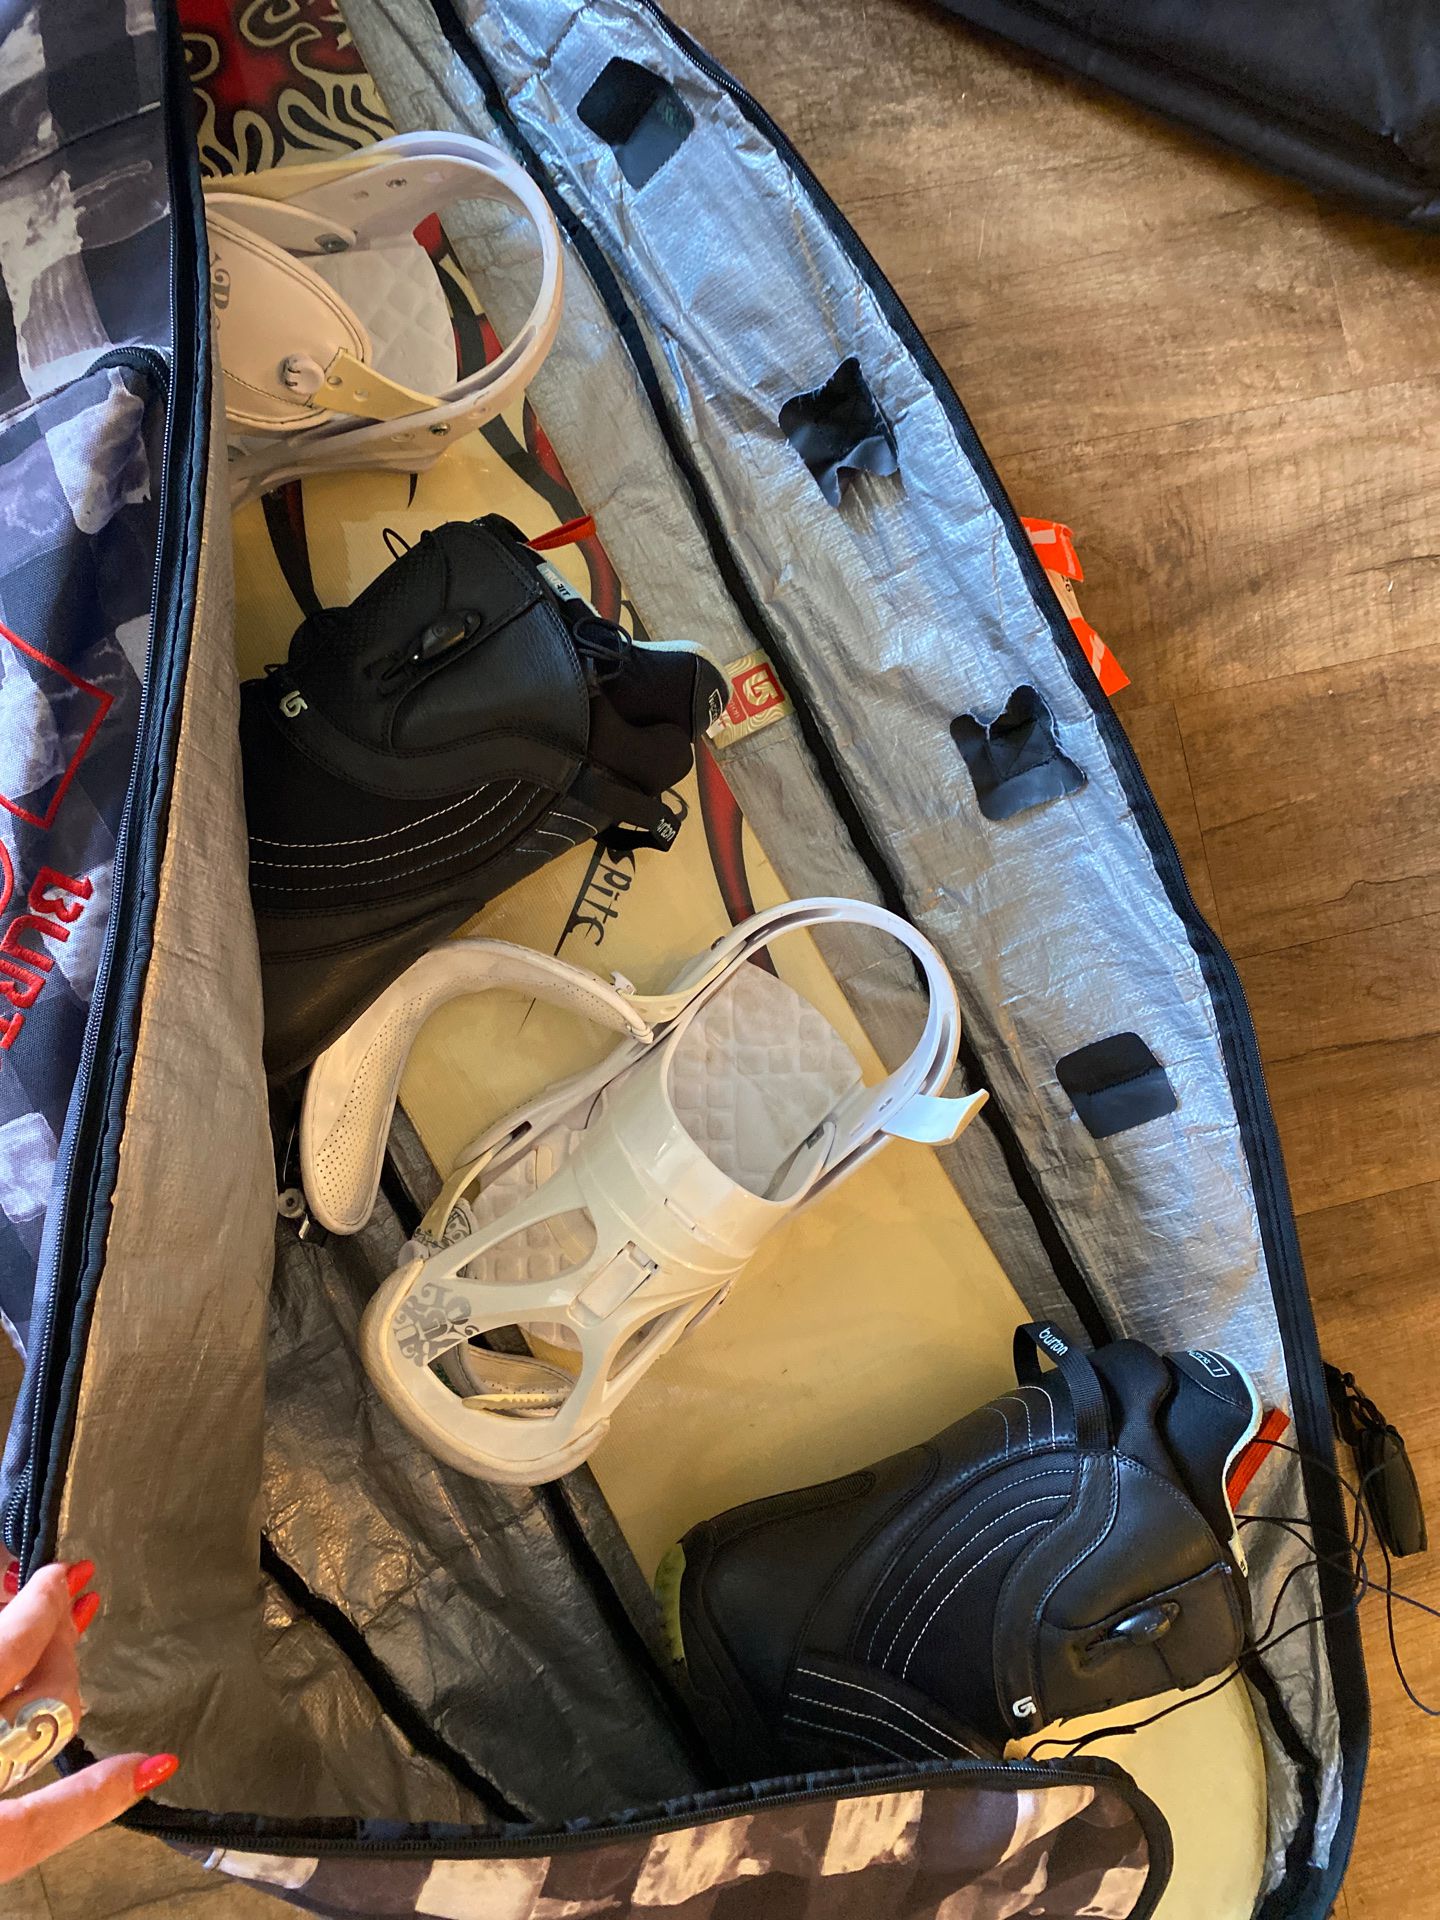 Women’s snowboard kit - boots, bindings, helmet, bag